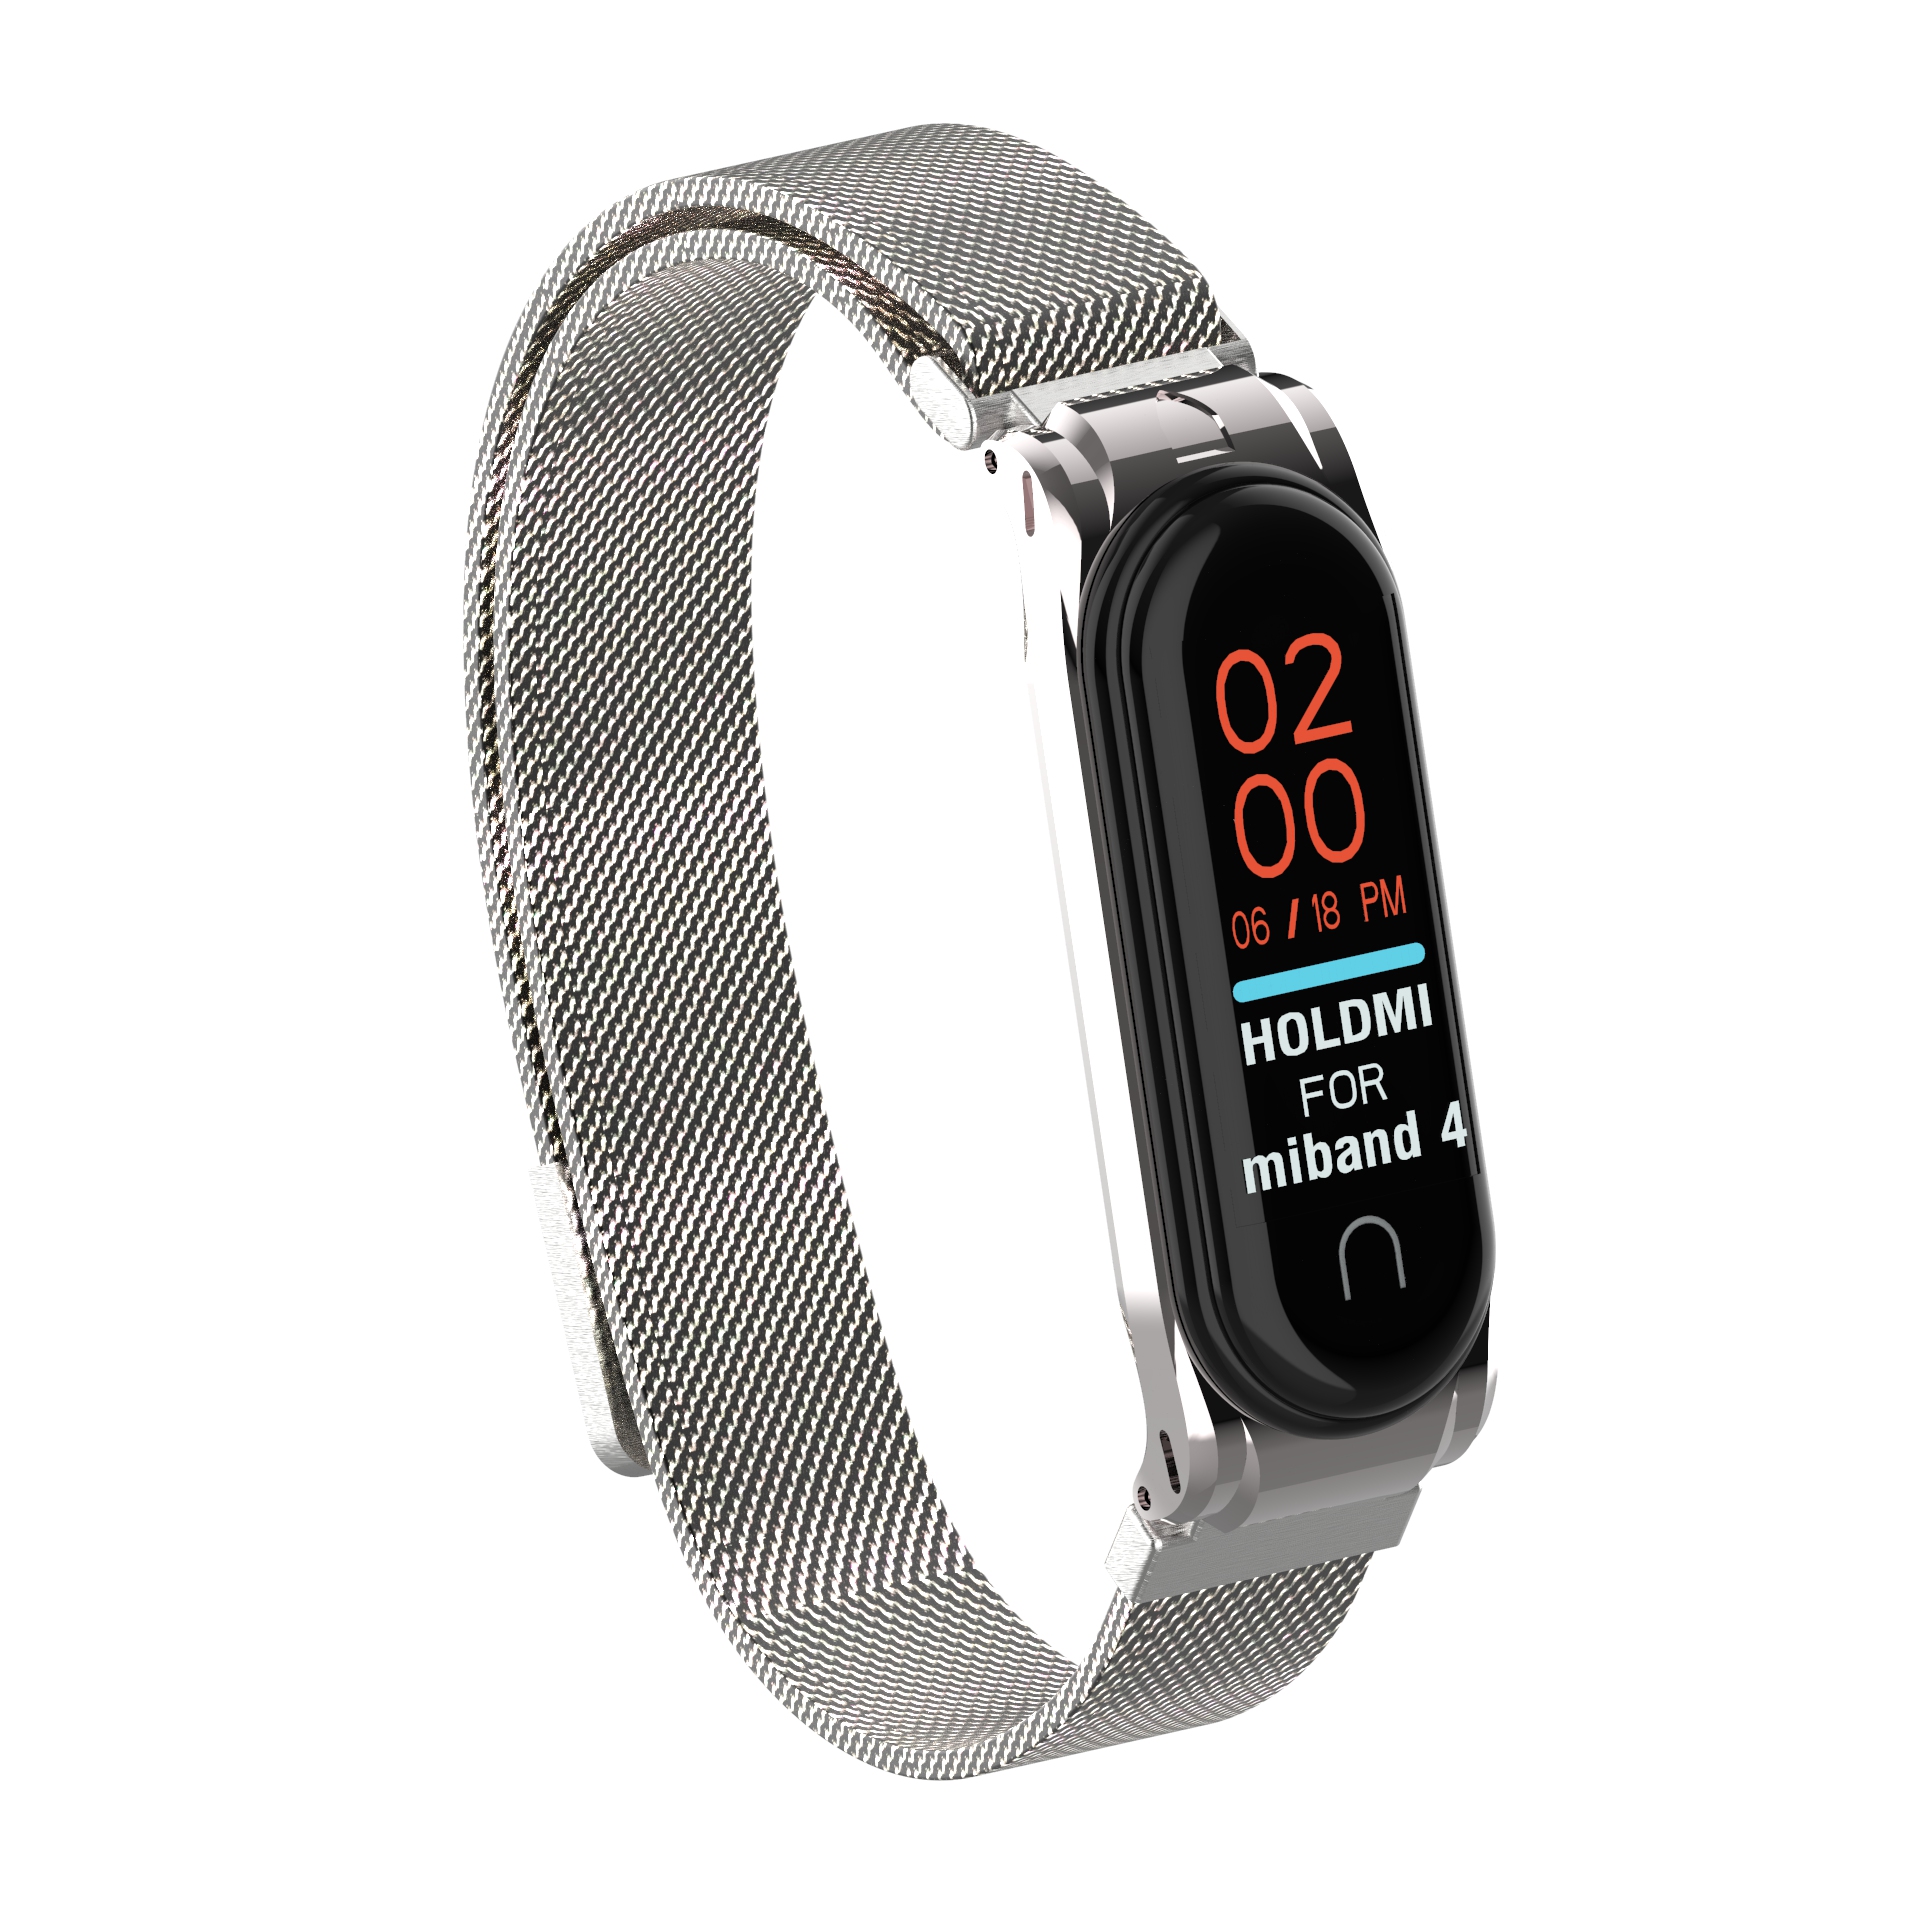 Bakeey-Milan-Stainless-Steel-Watch-Band-for-Xiaomi-mi-band-34-Smart-Watch-Non-original-1555793-8